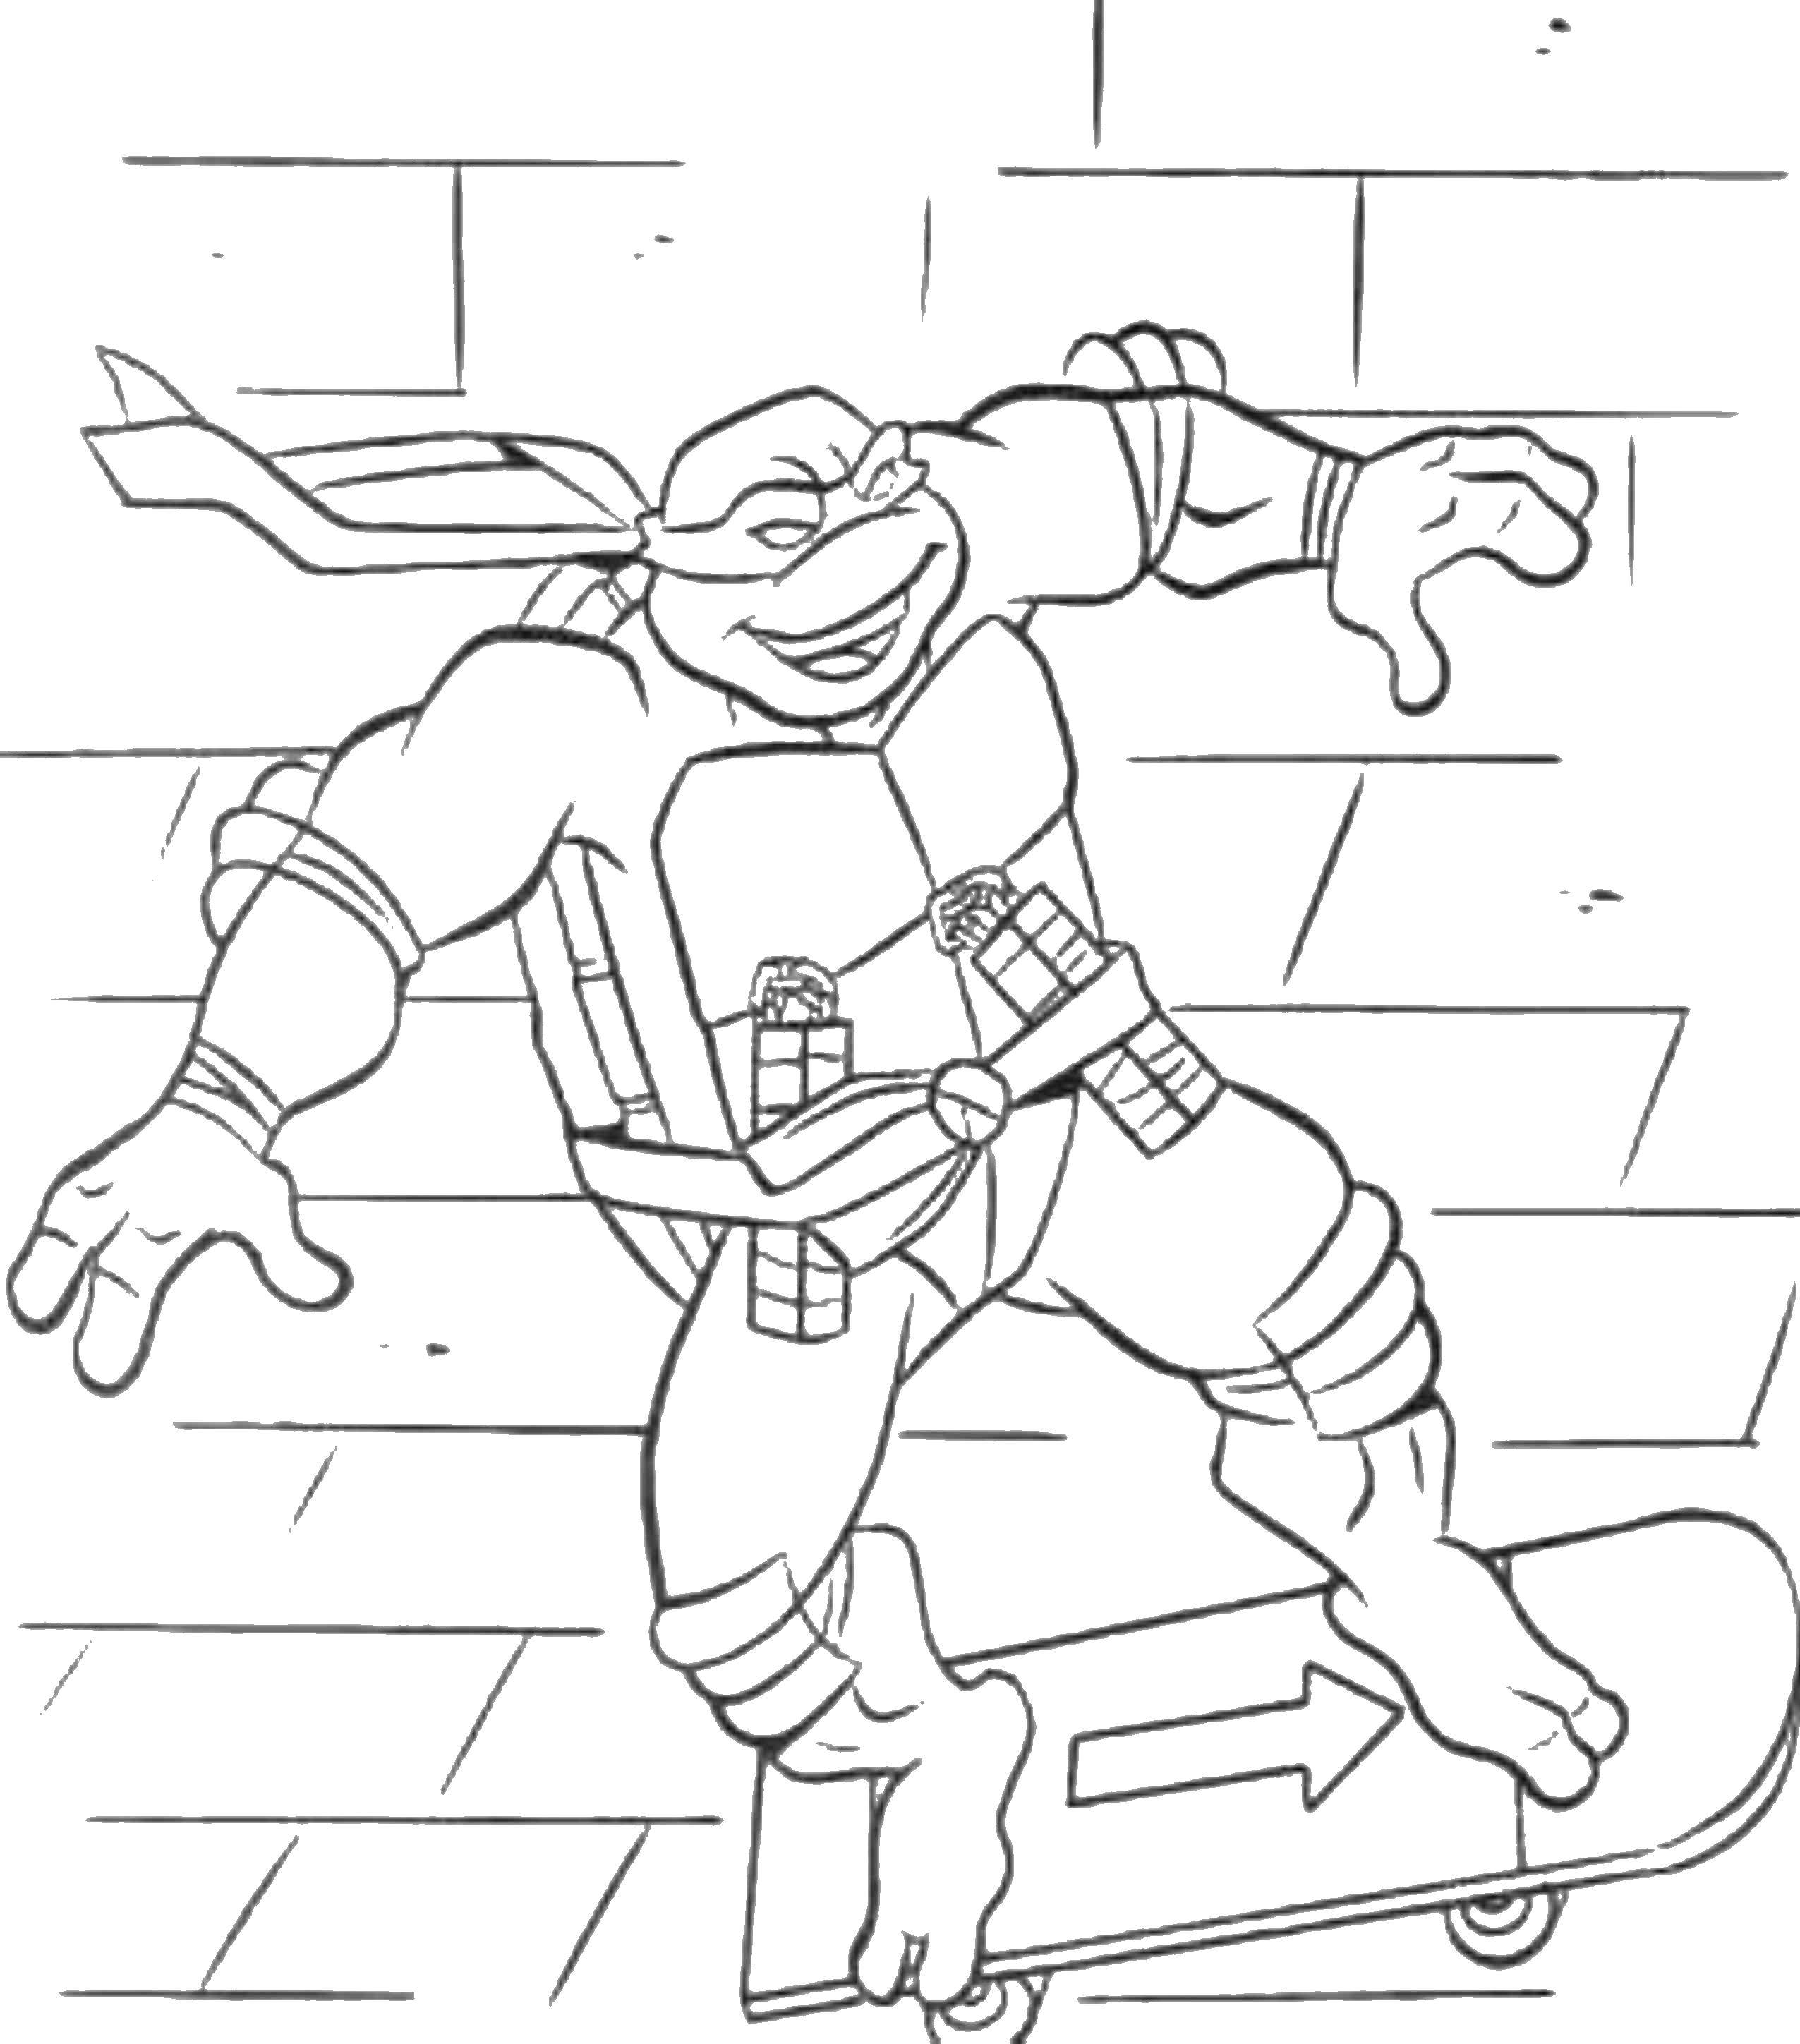 Coloring Ninja turtle. Category cartoons. Tags:  cartoons, chareuski, Ninja.